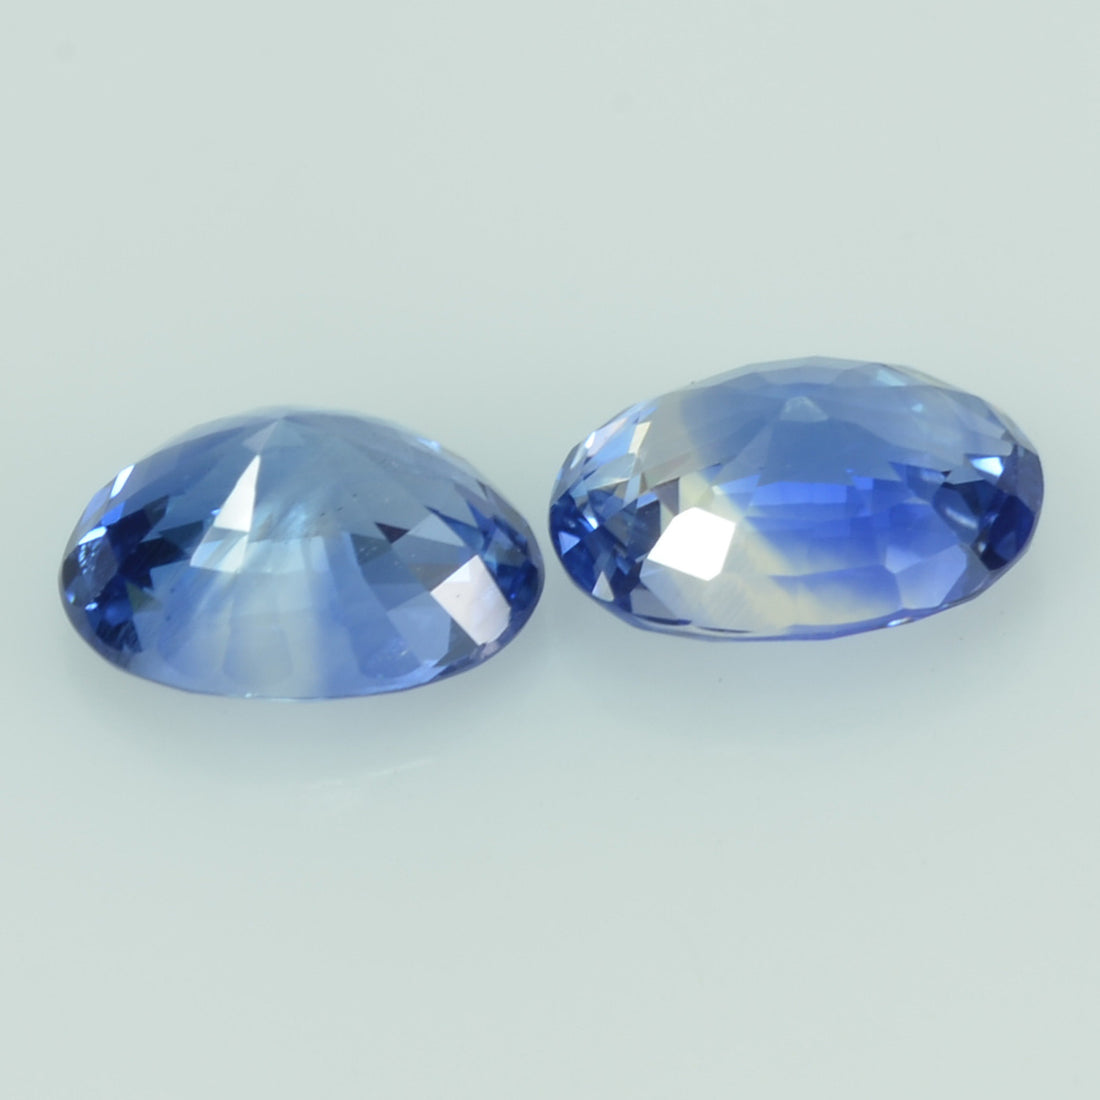 7x5 mm  Natural Blue Sapphire Loose Pair Gemstone Oval Cut - Thai Gems Export Ltd.